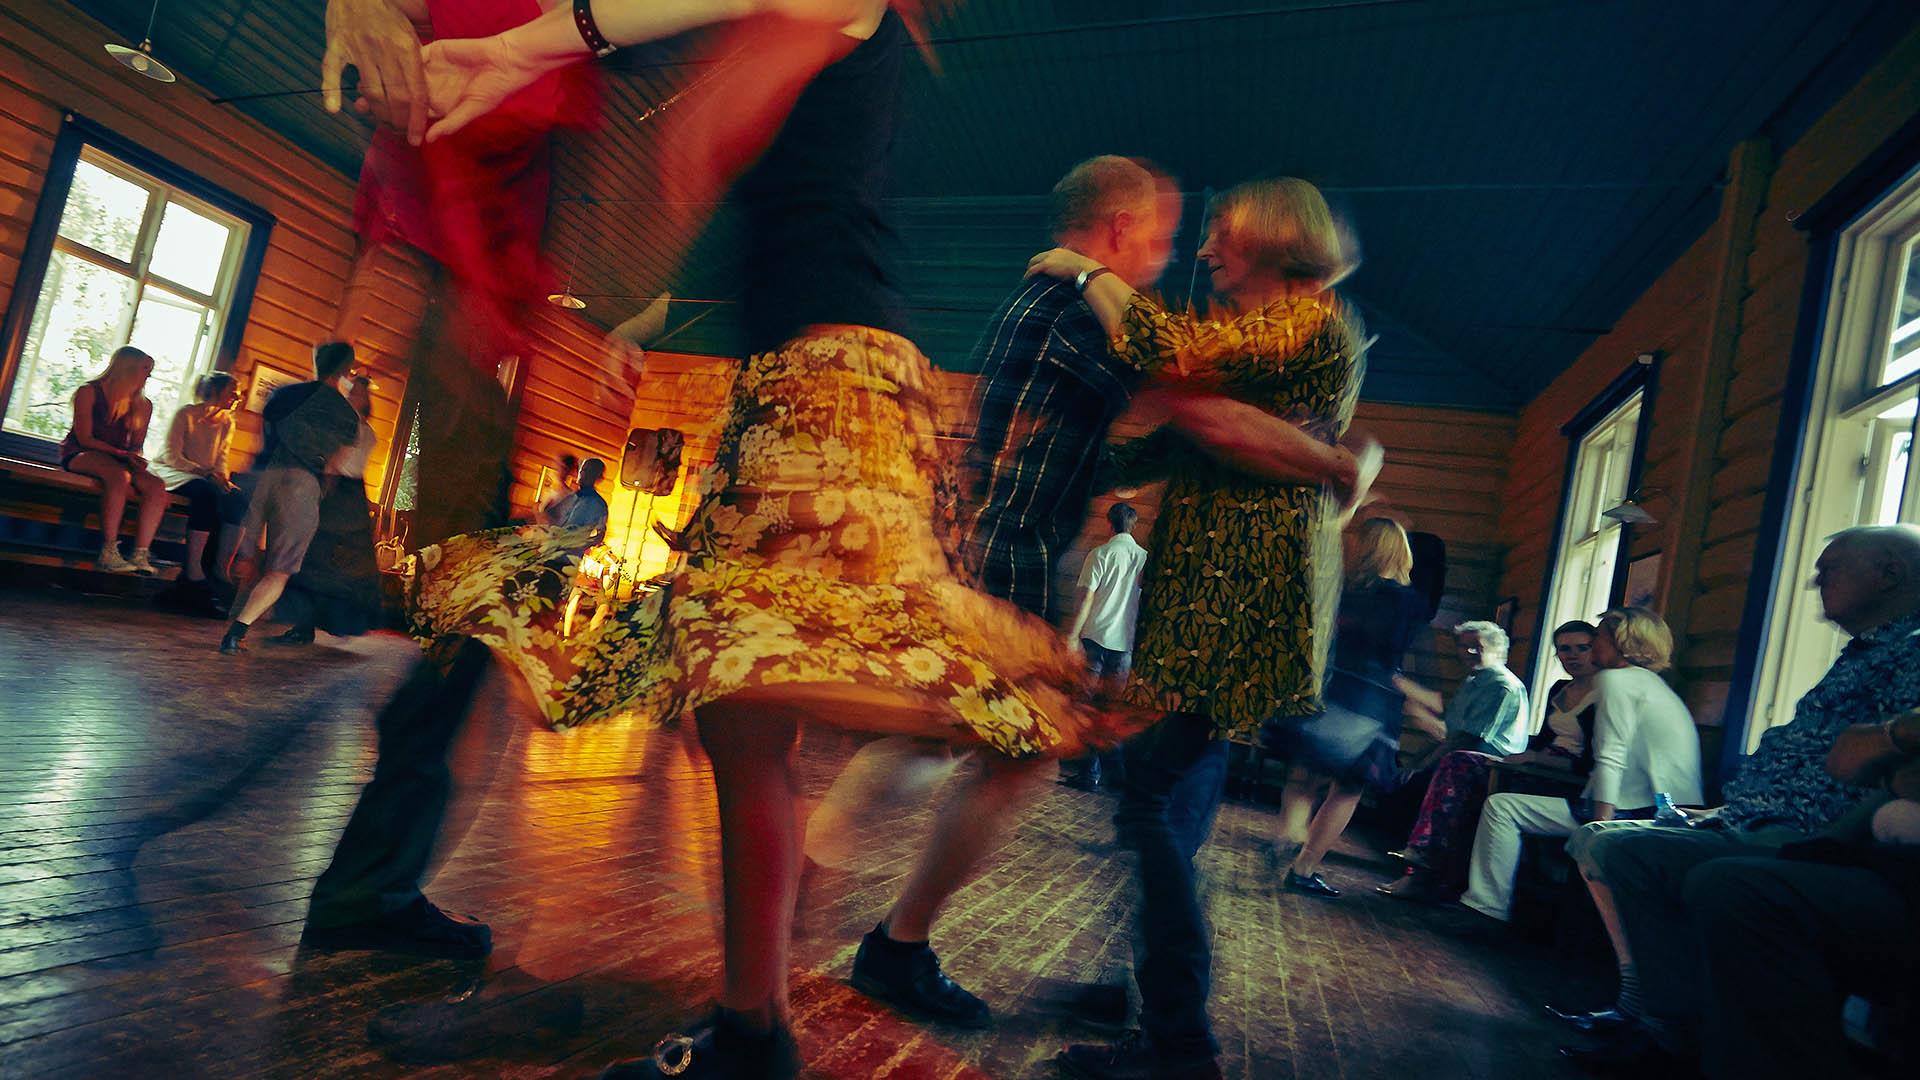 People swirl around dancing during a warm summer night